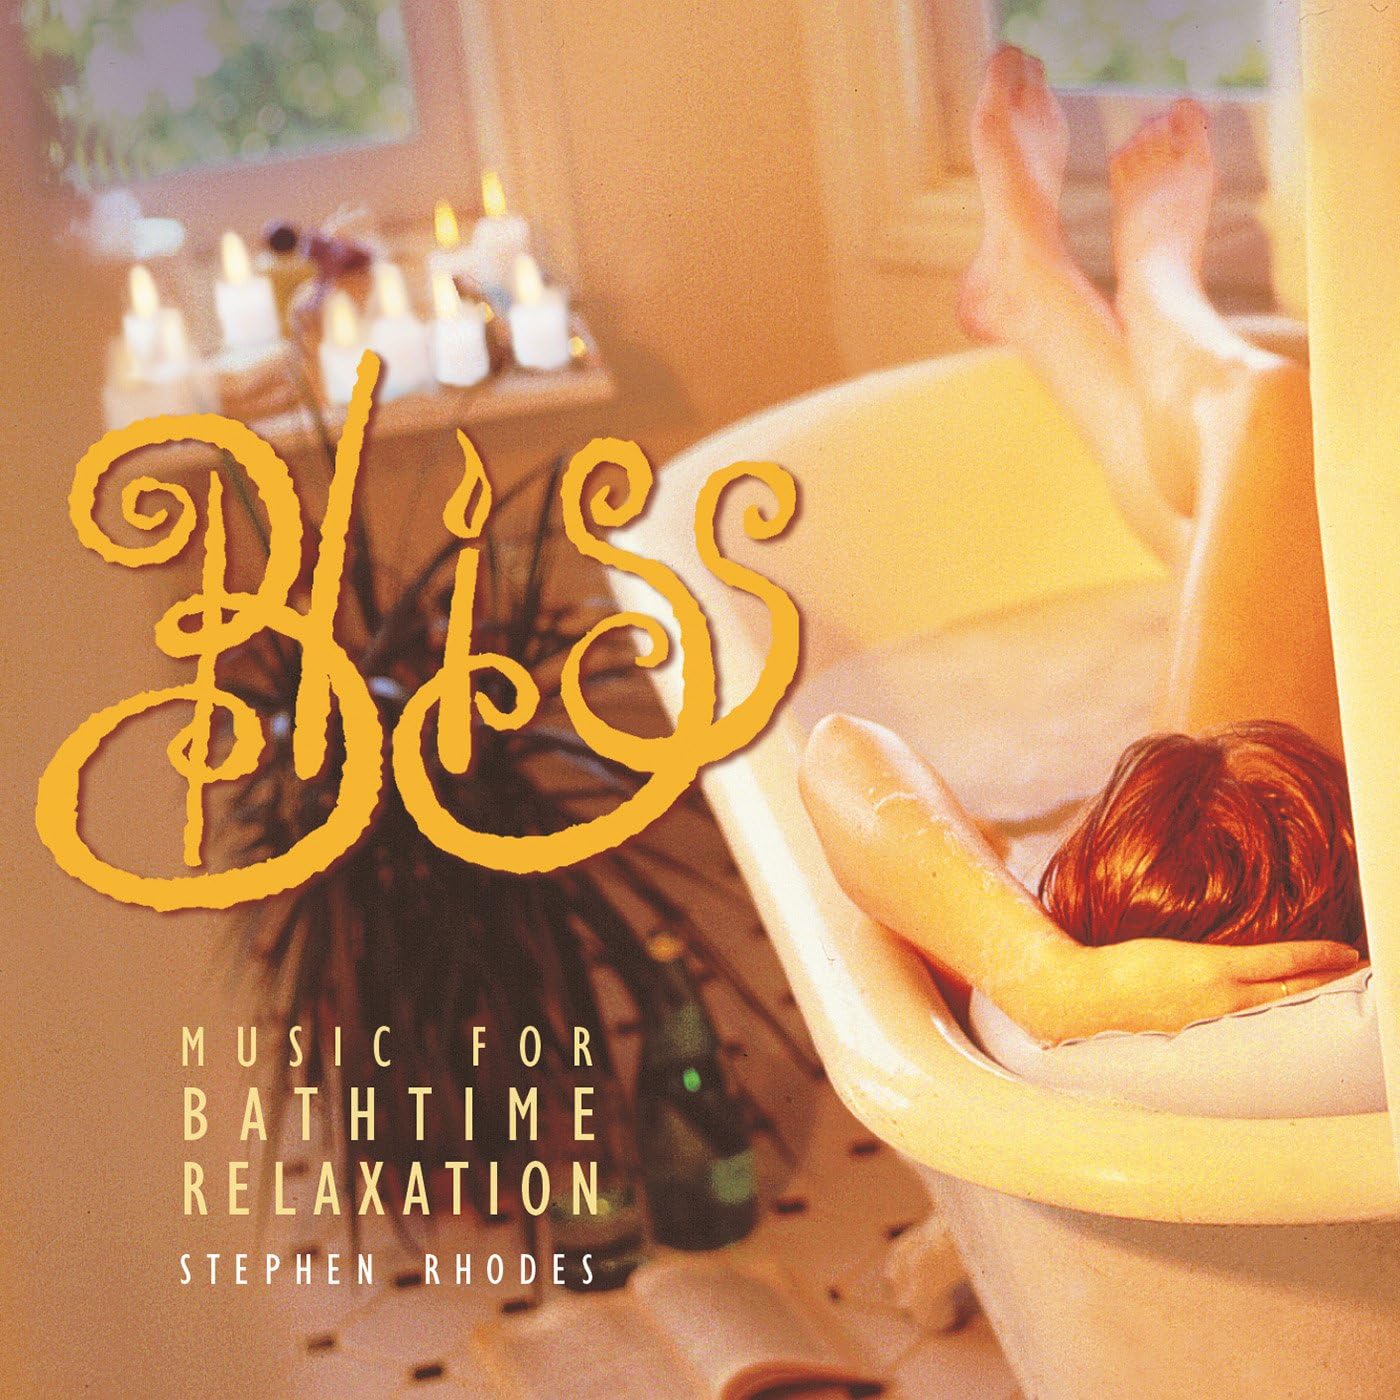 Bliss: Music for bathtime relaxation - Stephen Rhodes CD